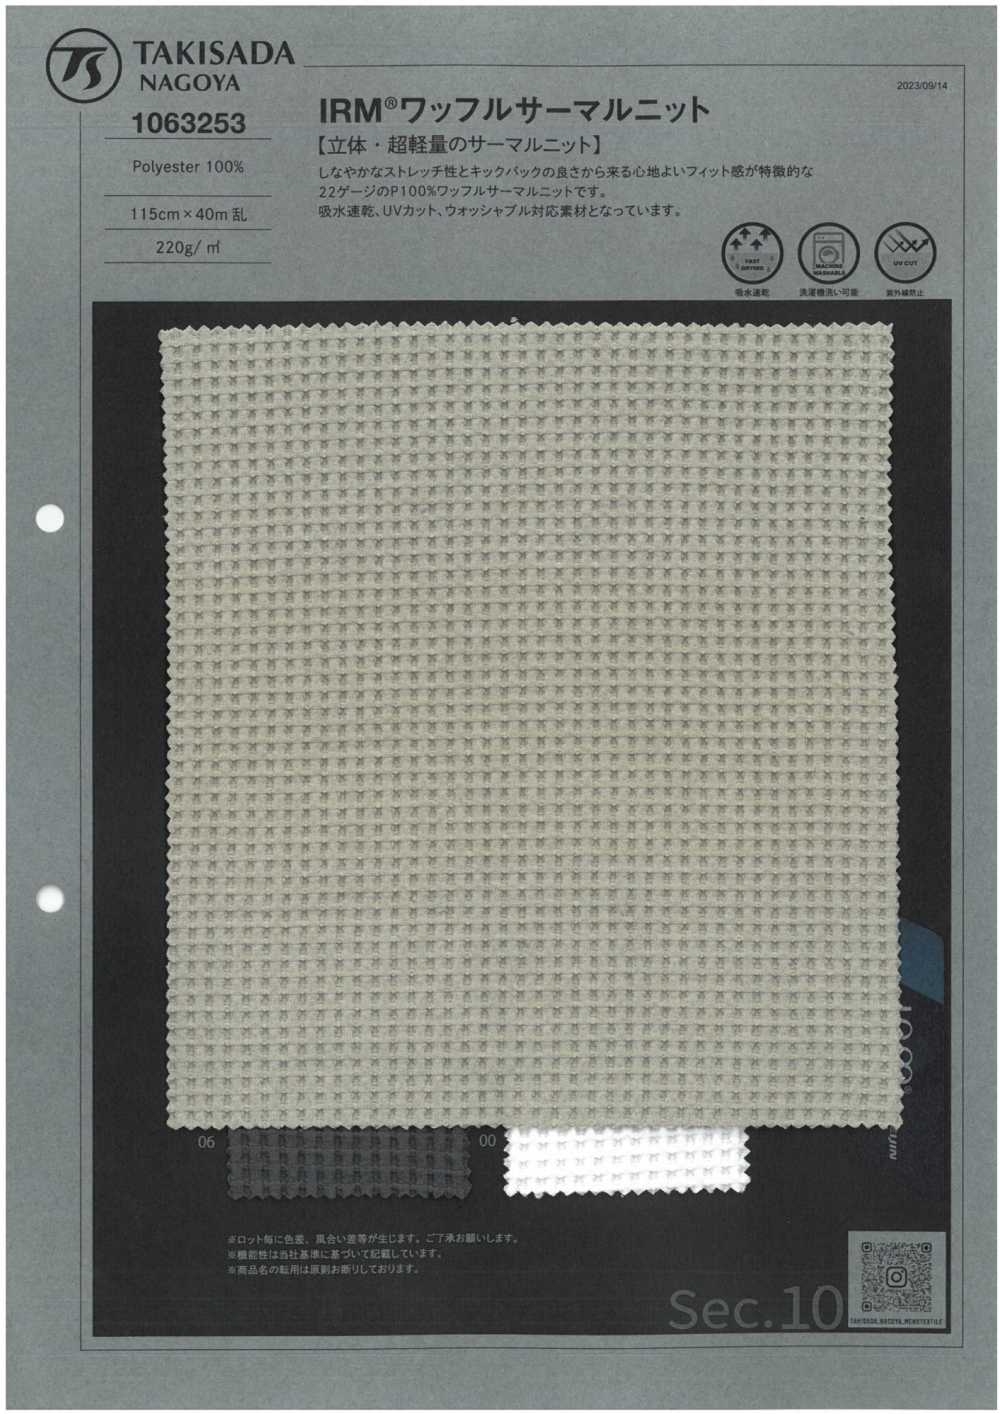 1063253 Tricot Thermique IRM® Waffle Knit[Fabrication De Textile] Takisada Nagoya